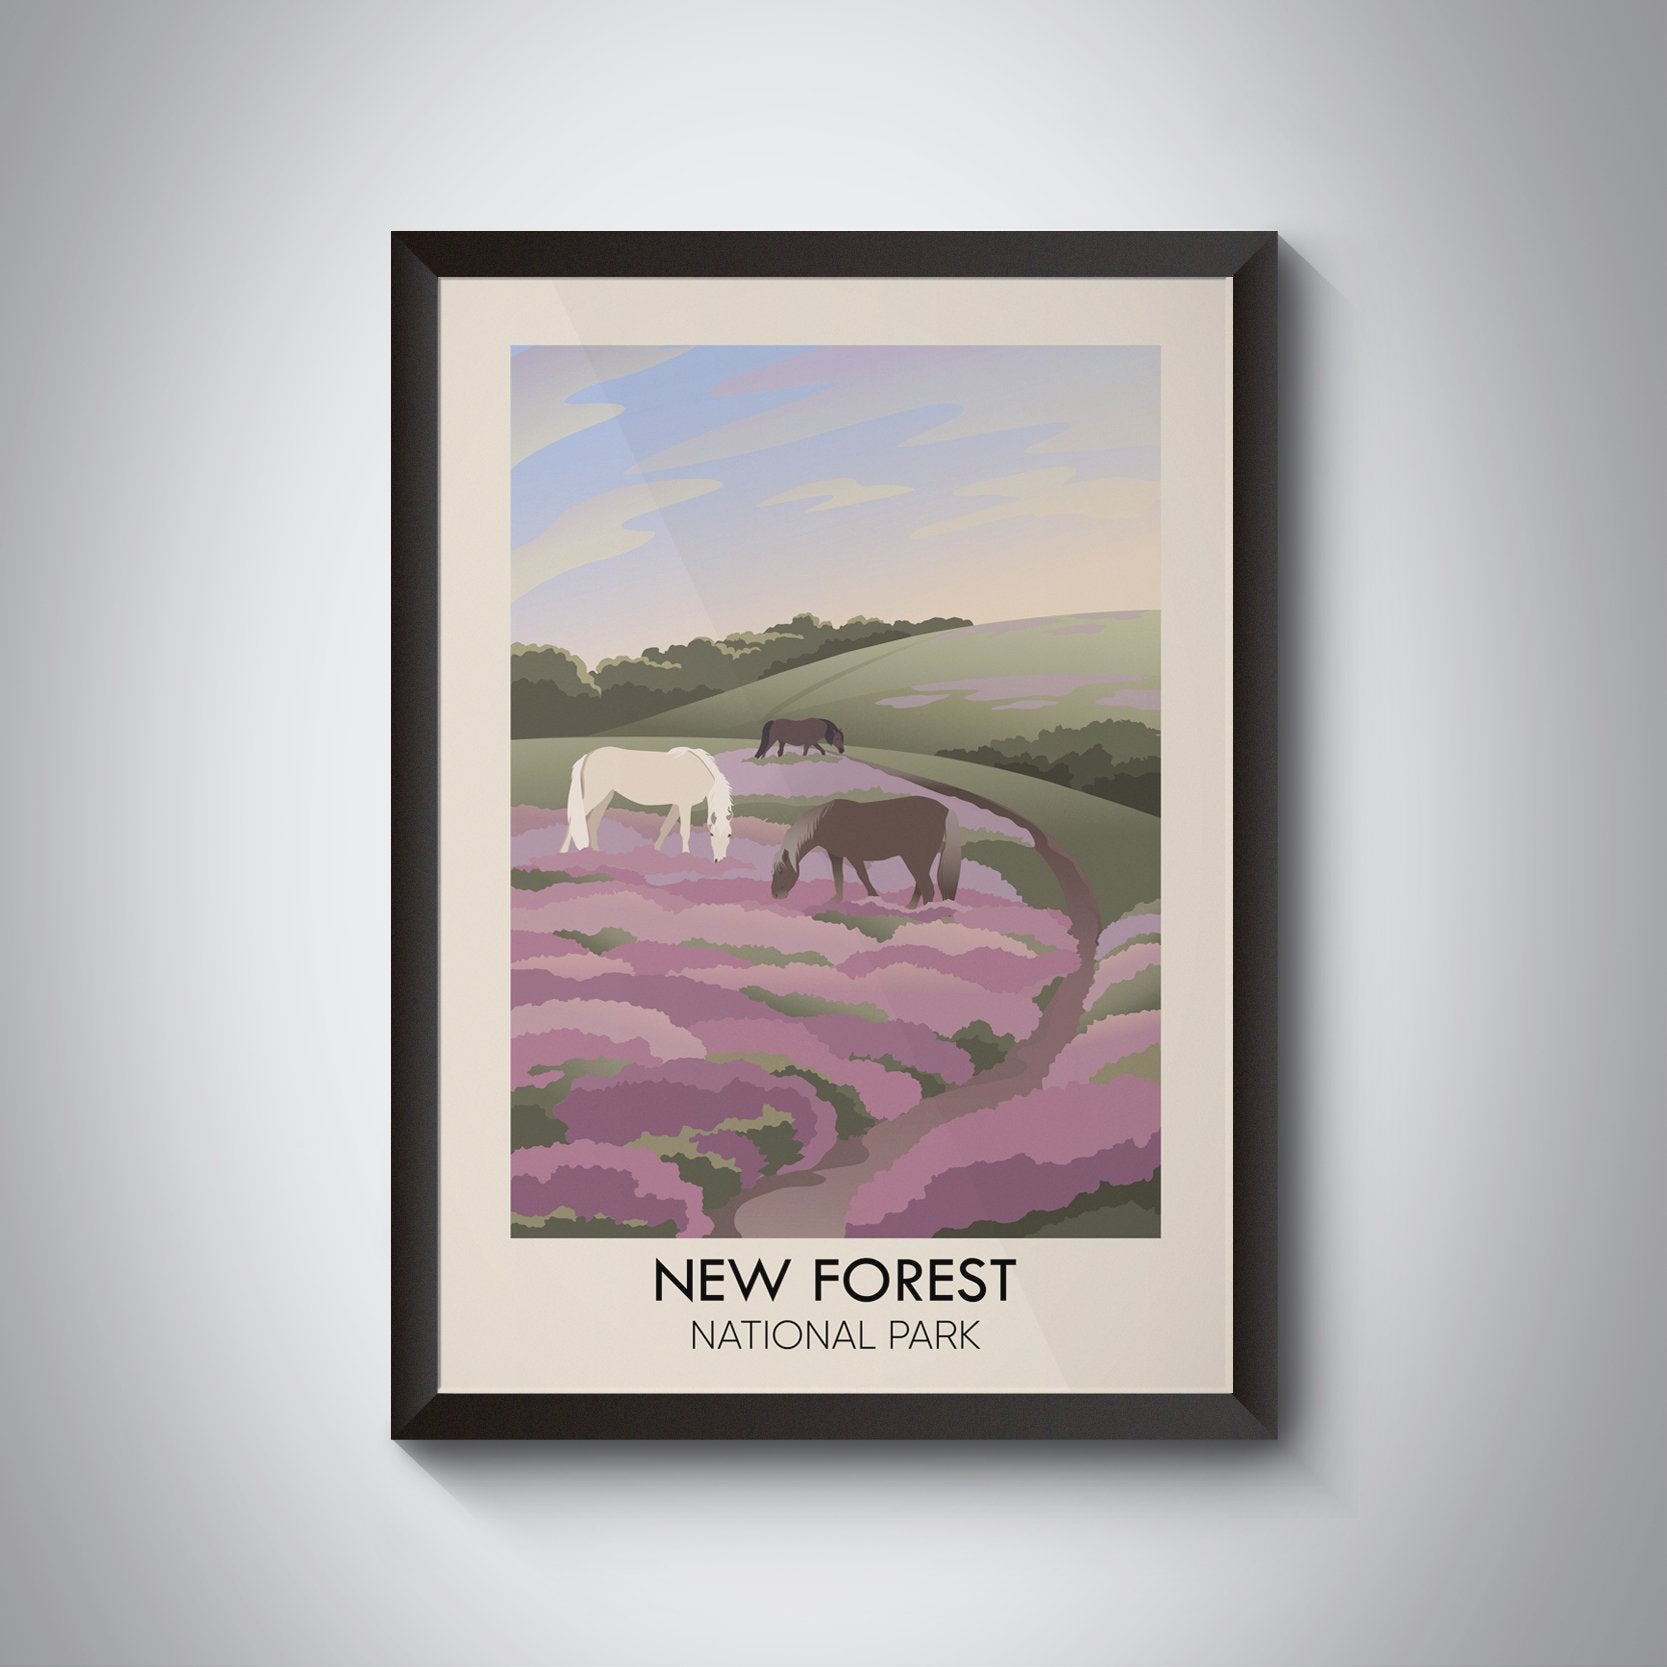 New Forest National Park Modern Travel Poster